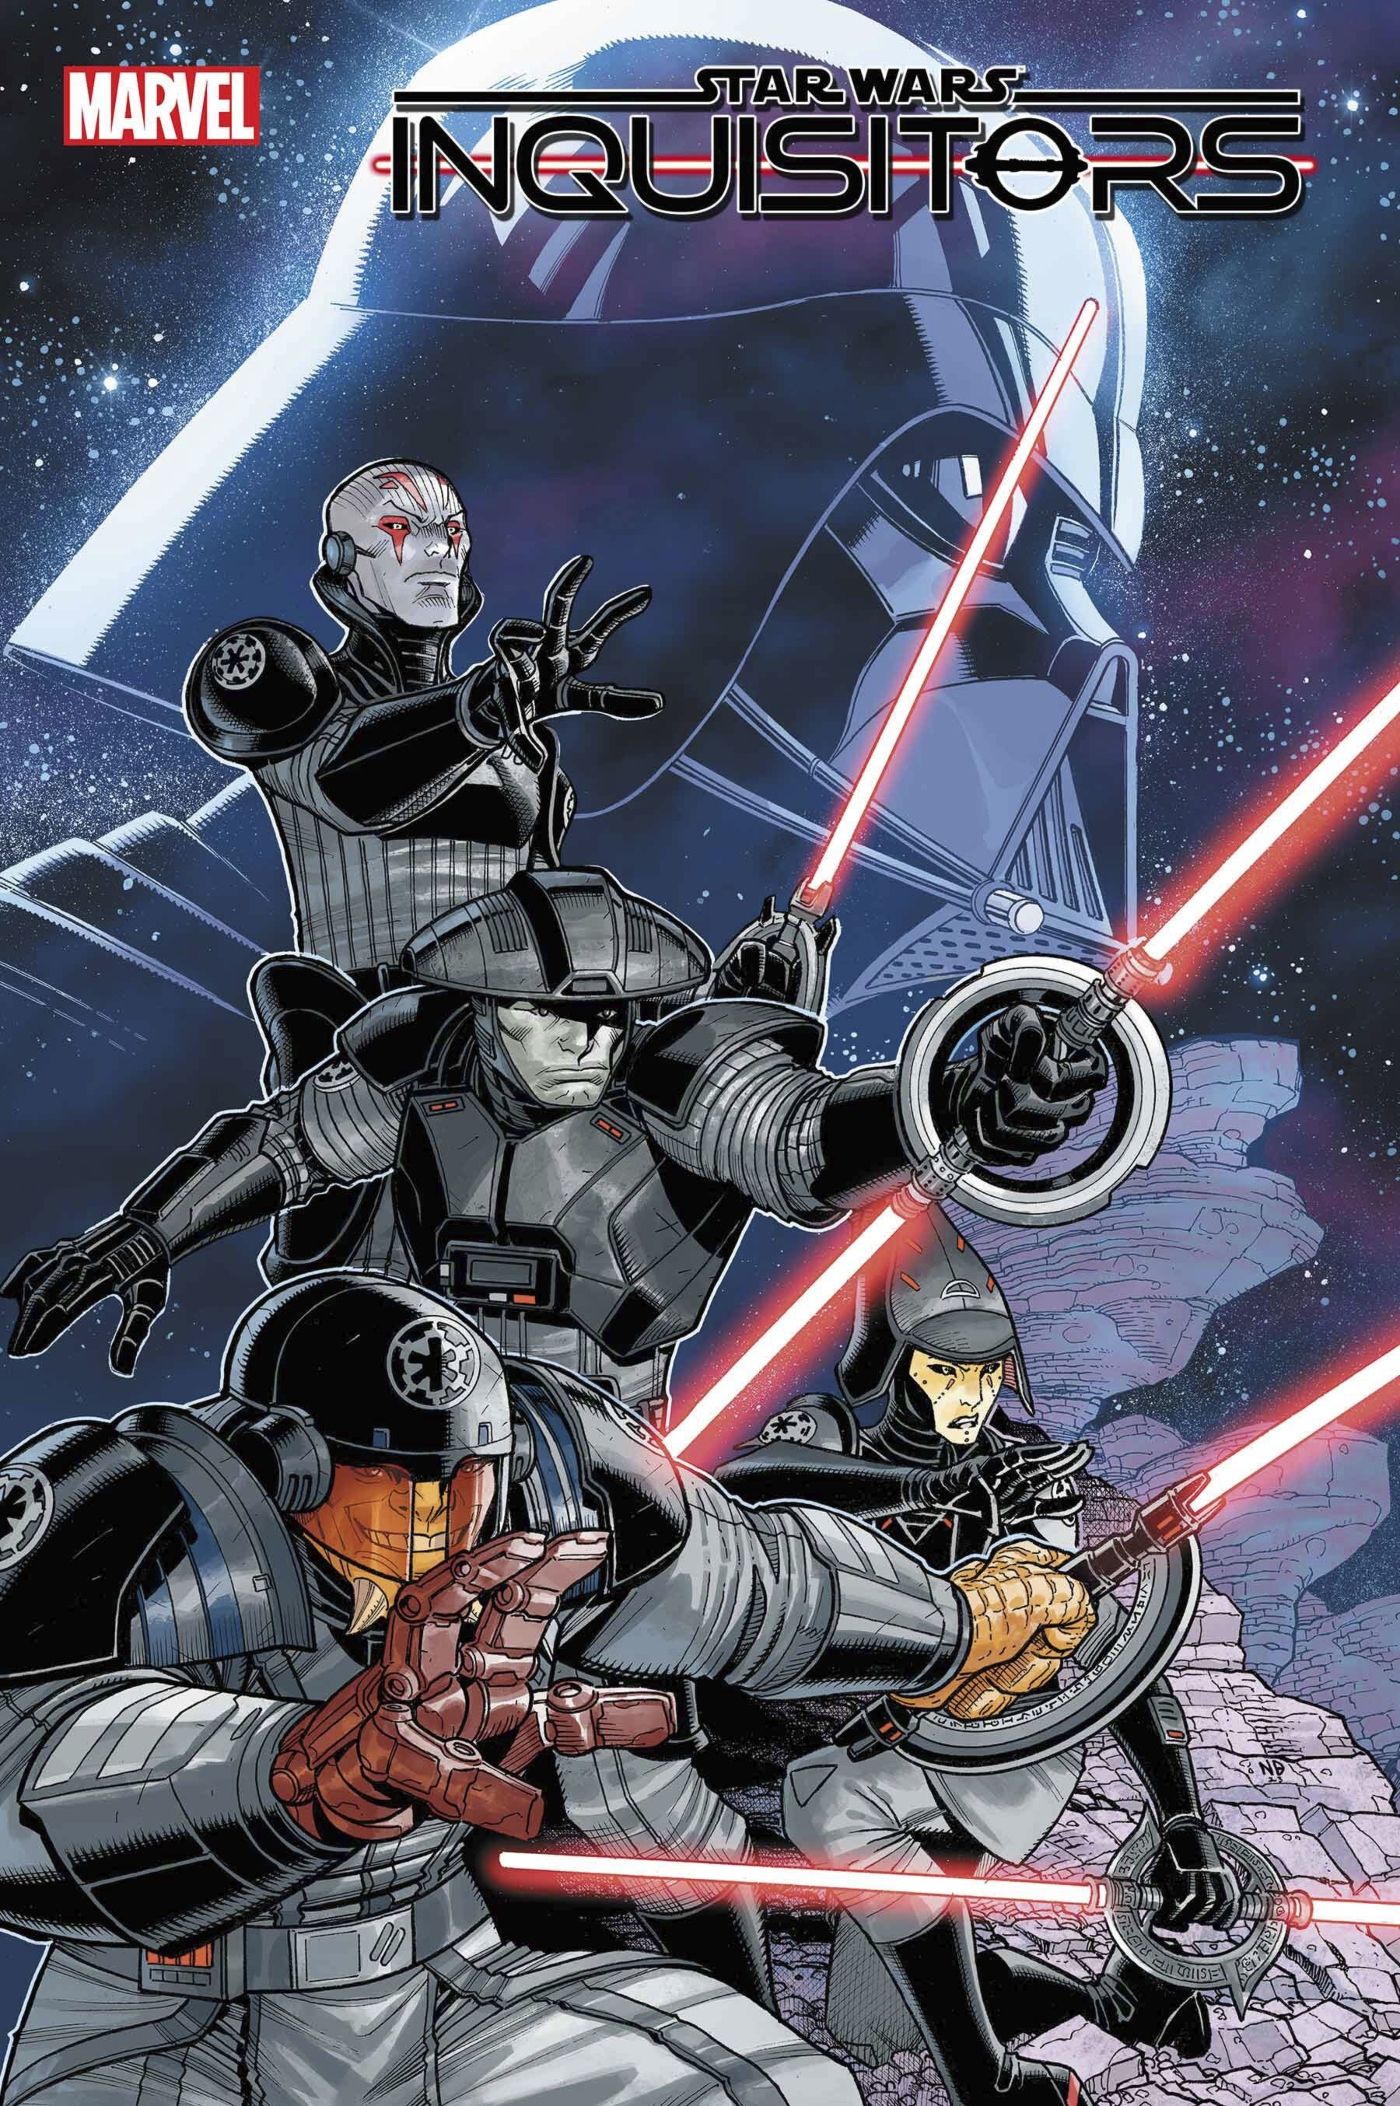 Capa principal de Star Wars Inquisitors #1 apresentando os Inquisidores sob a sombra de Darth Vader.